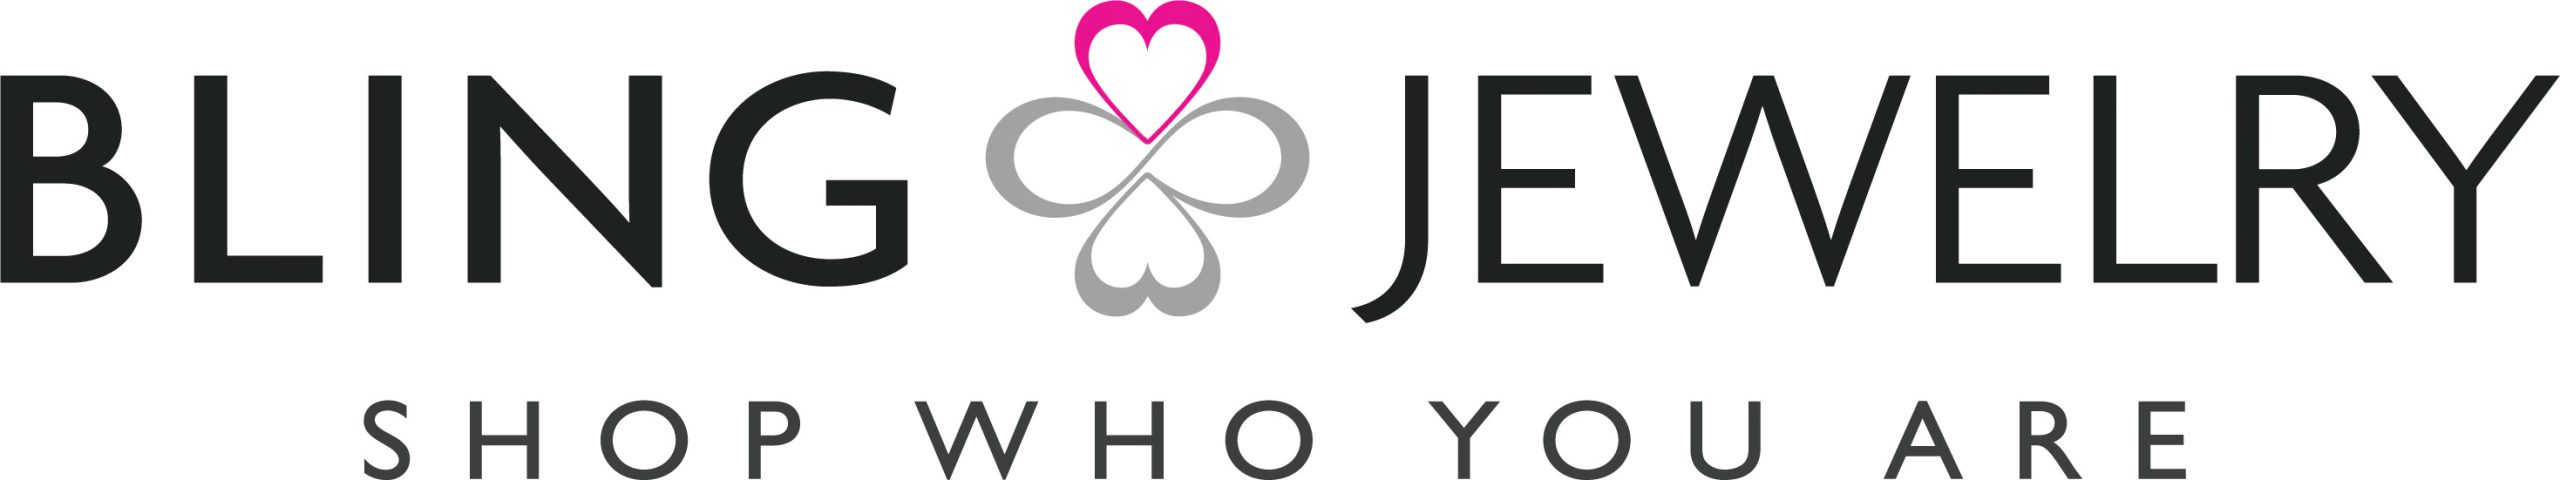 bling jewellery logo